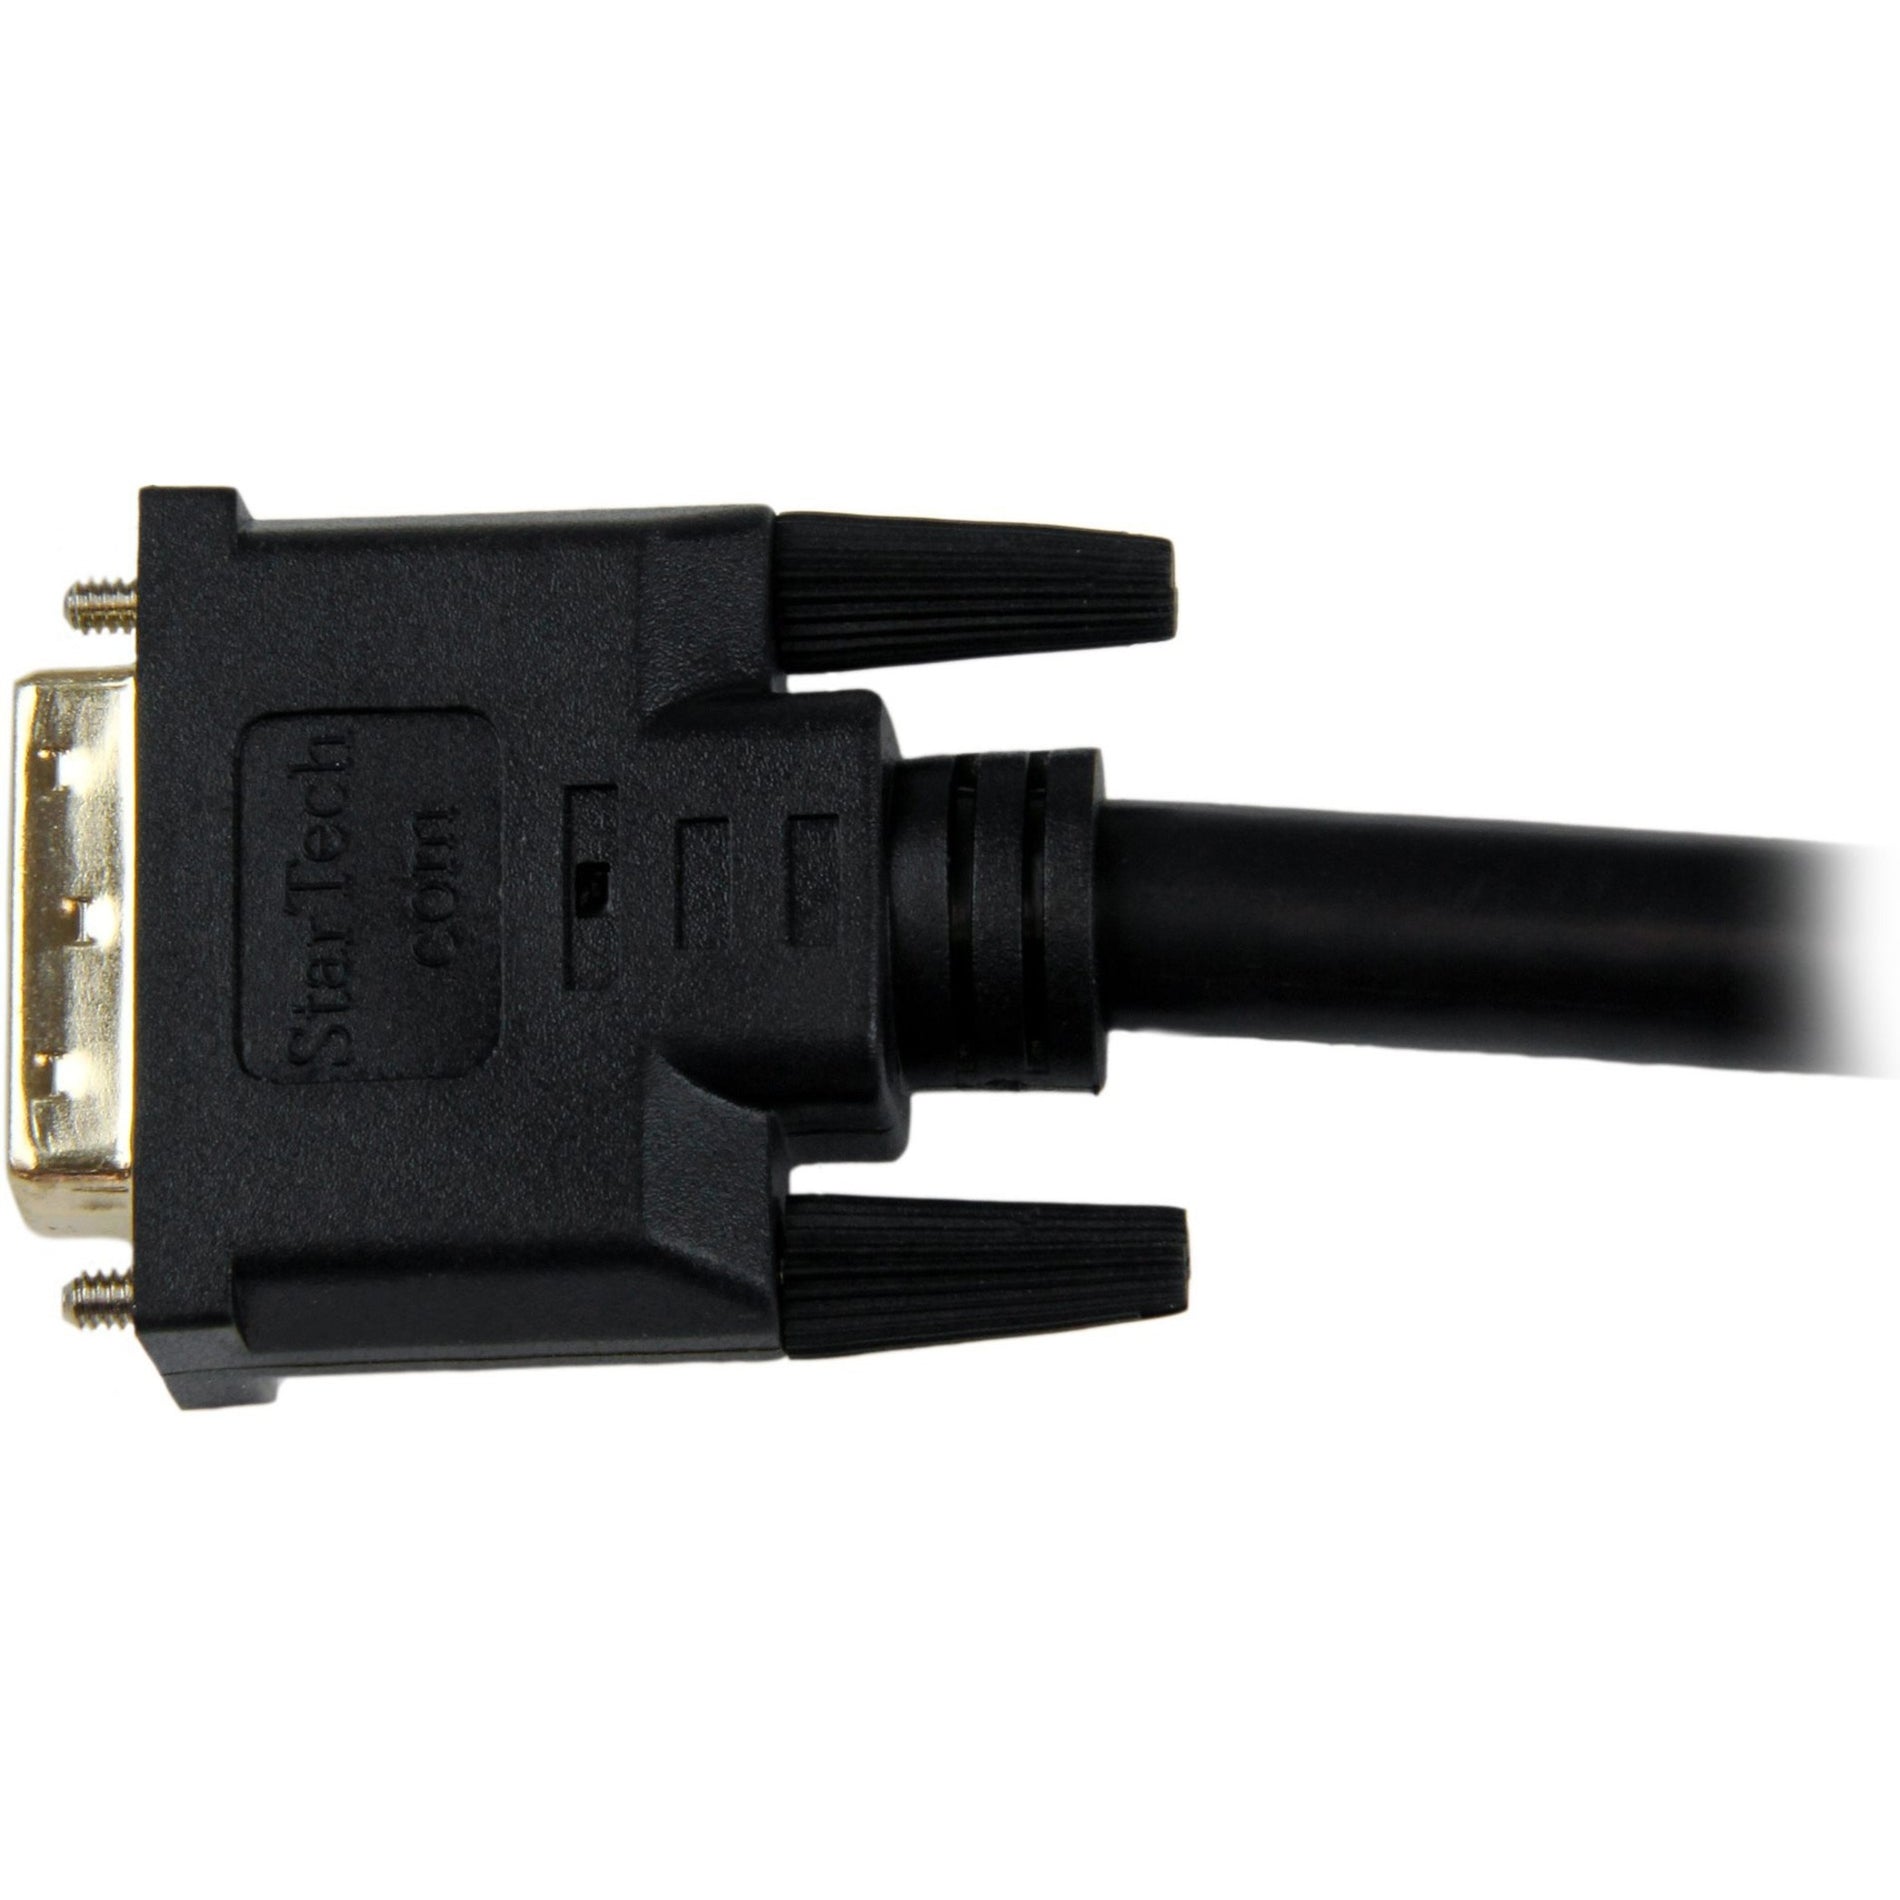 StarTech.com HDMIDVIMM30 30 ft HDMI to DVI-D Kabel - M/M Geformt Passiv Zugentlastung Kupferleiter Geschirmt 24 AWG Vernickelte Stecker Schwarz